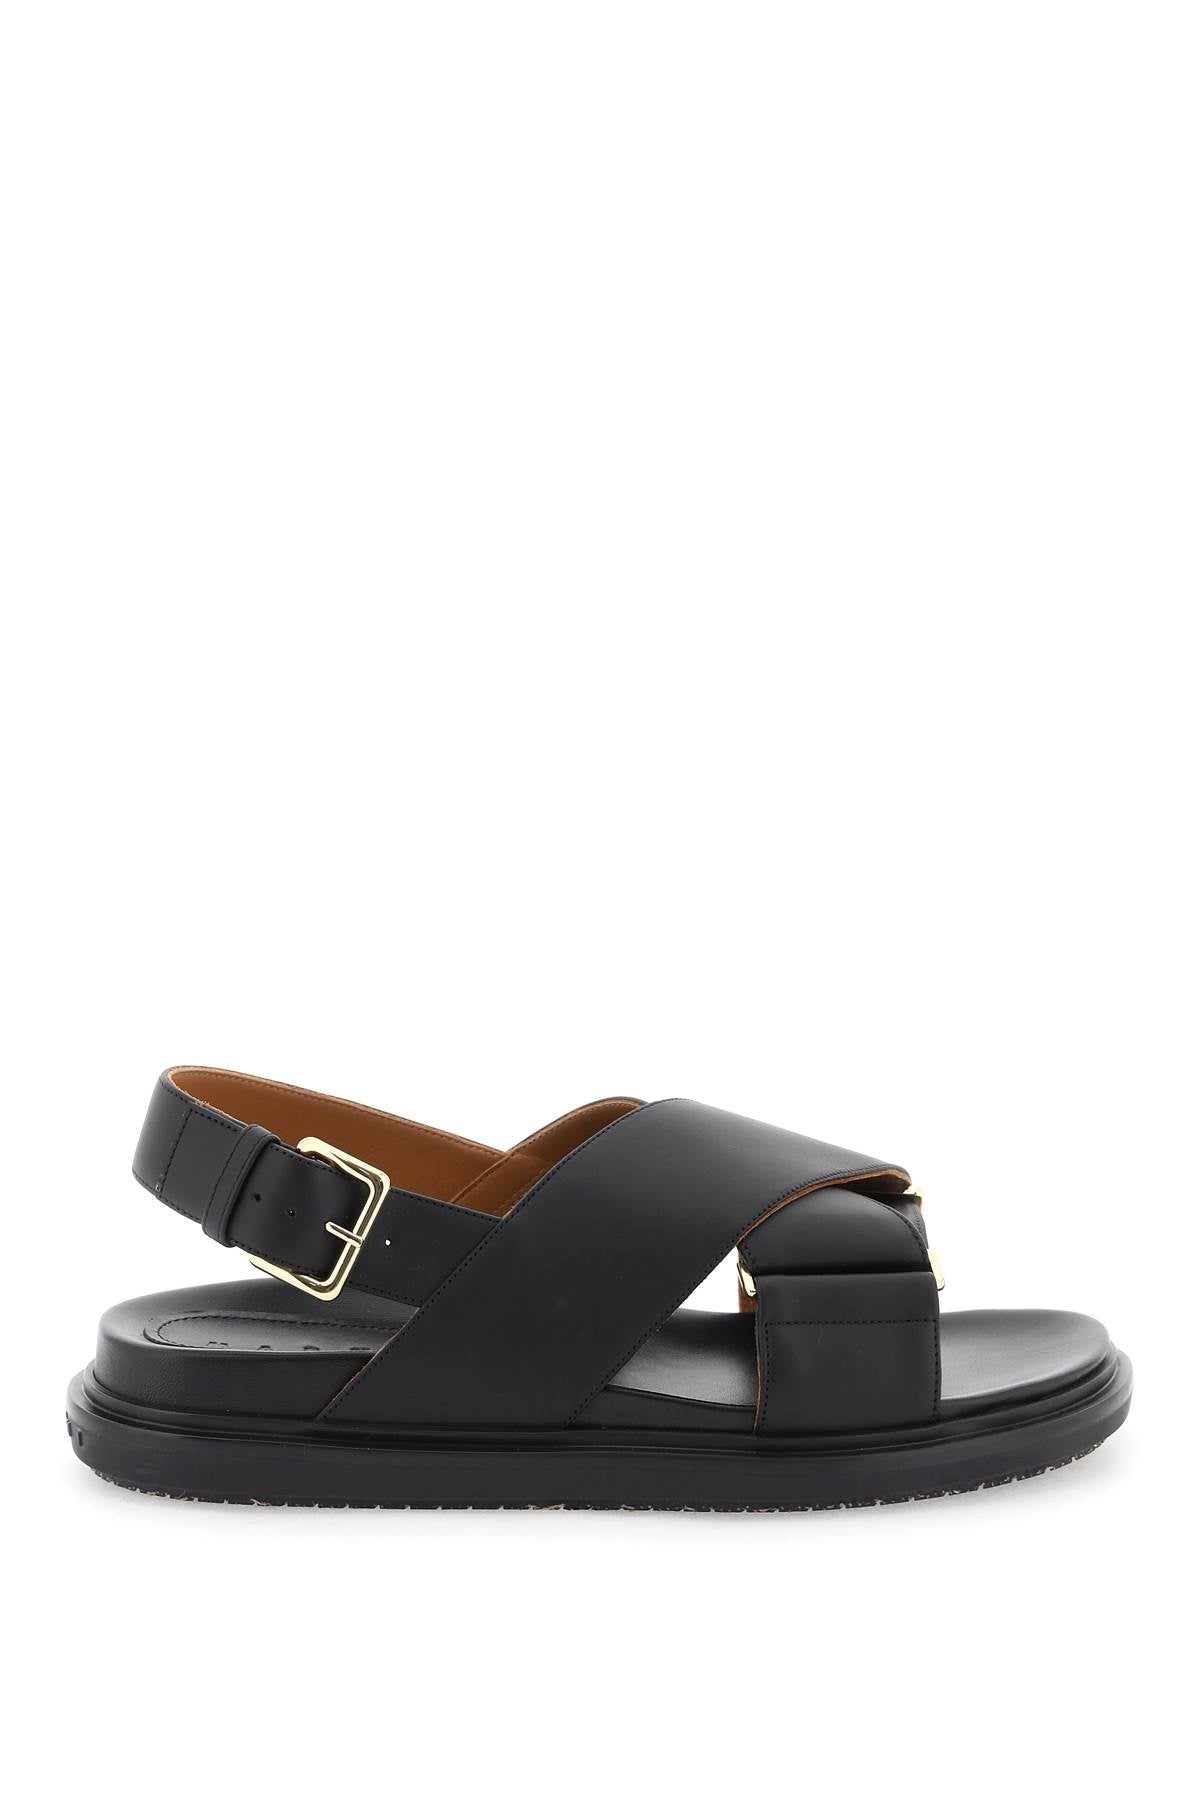 Marni fussbett leather sandals-0